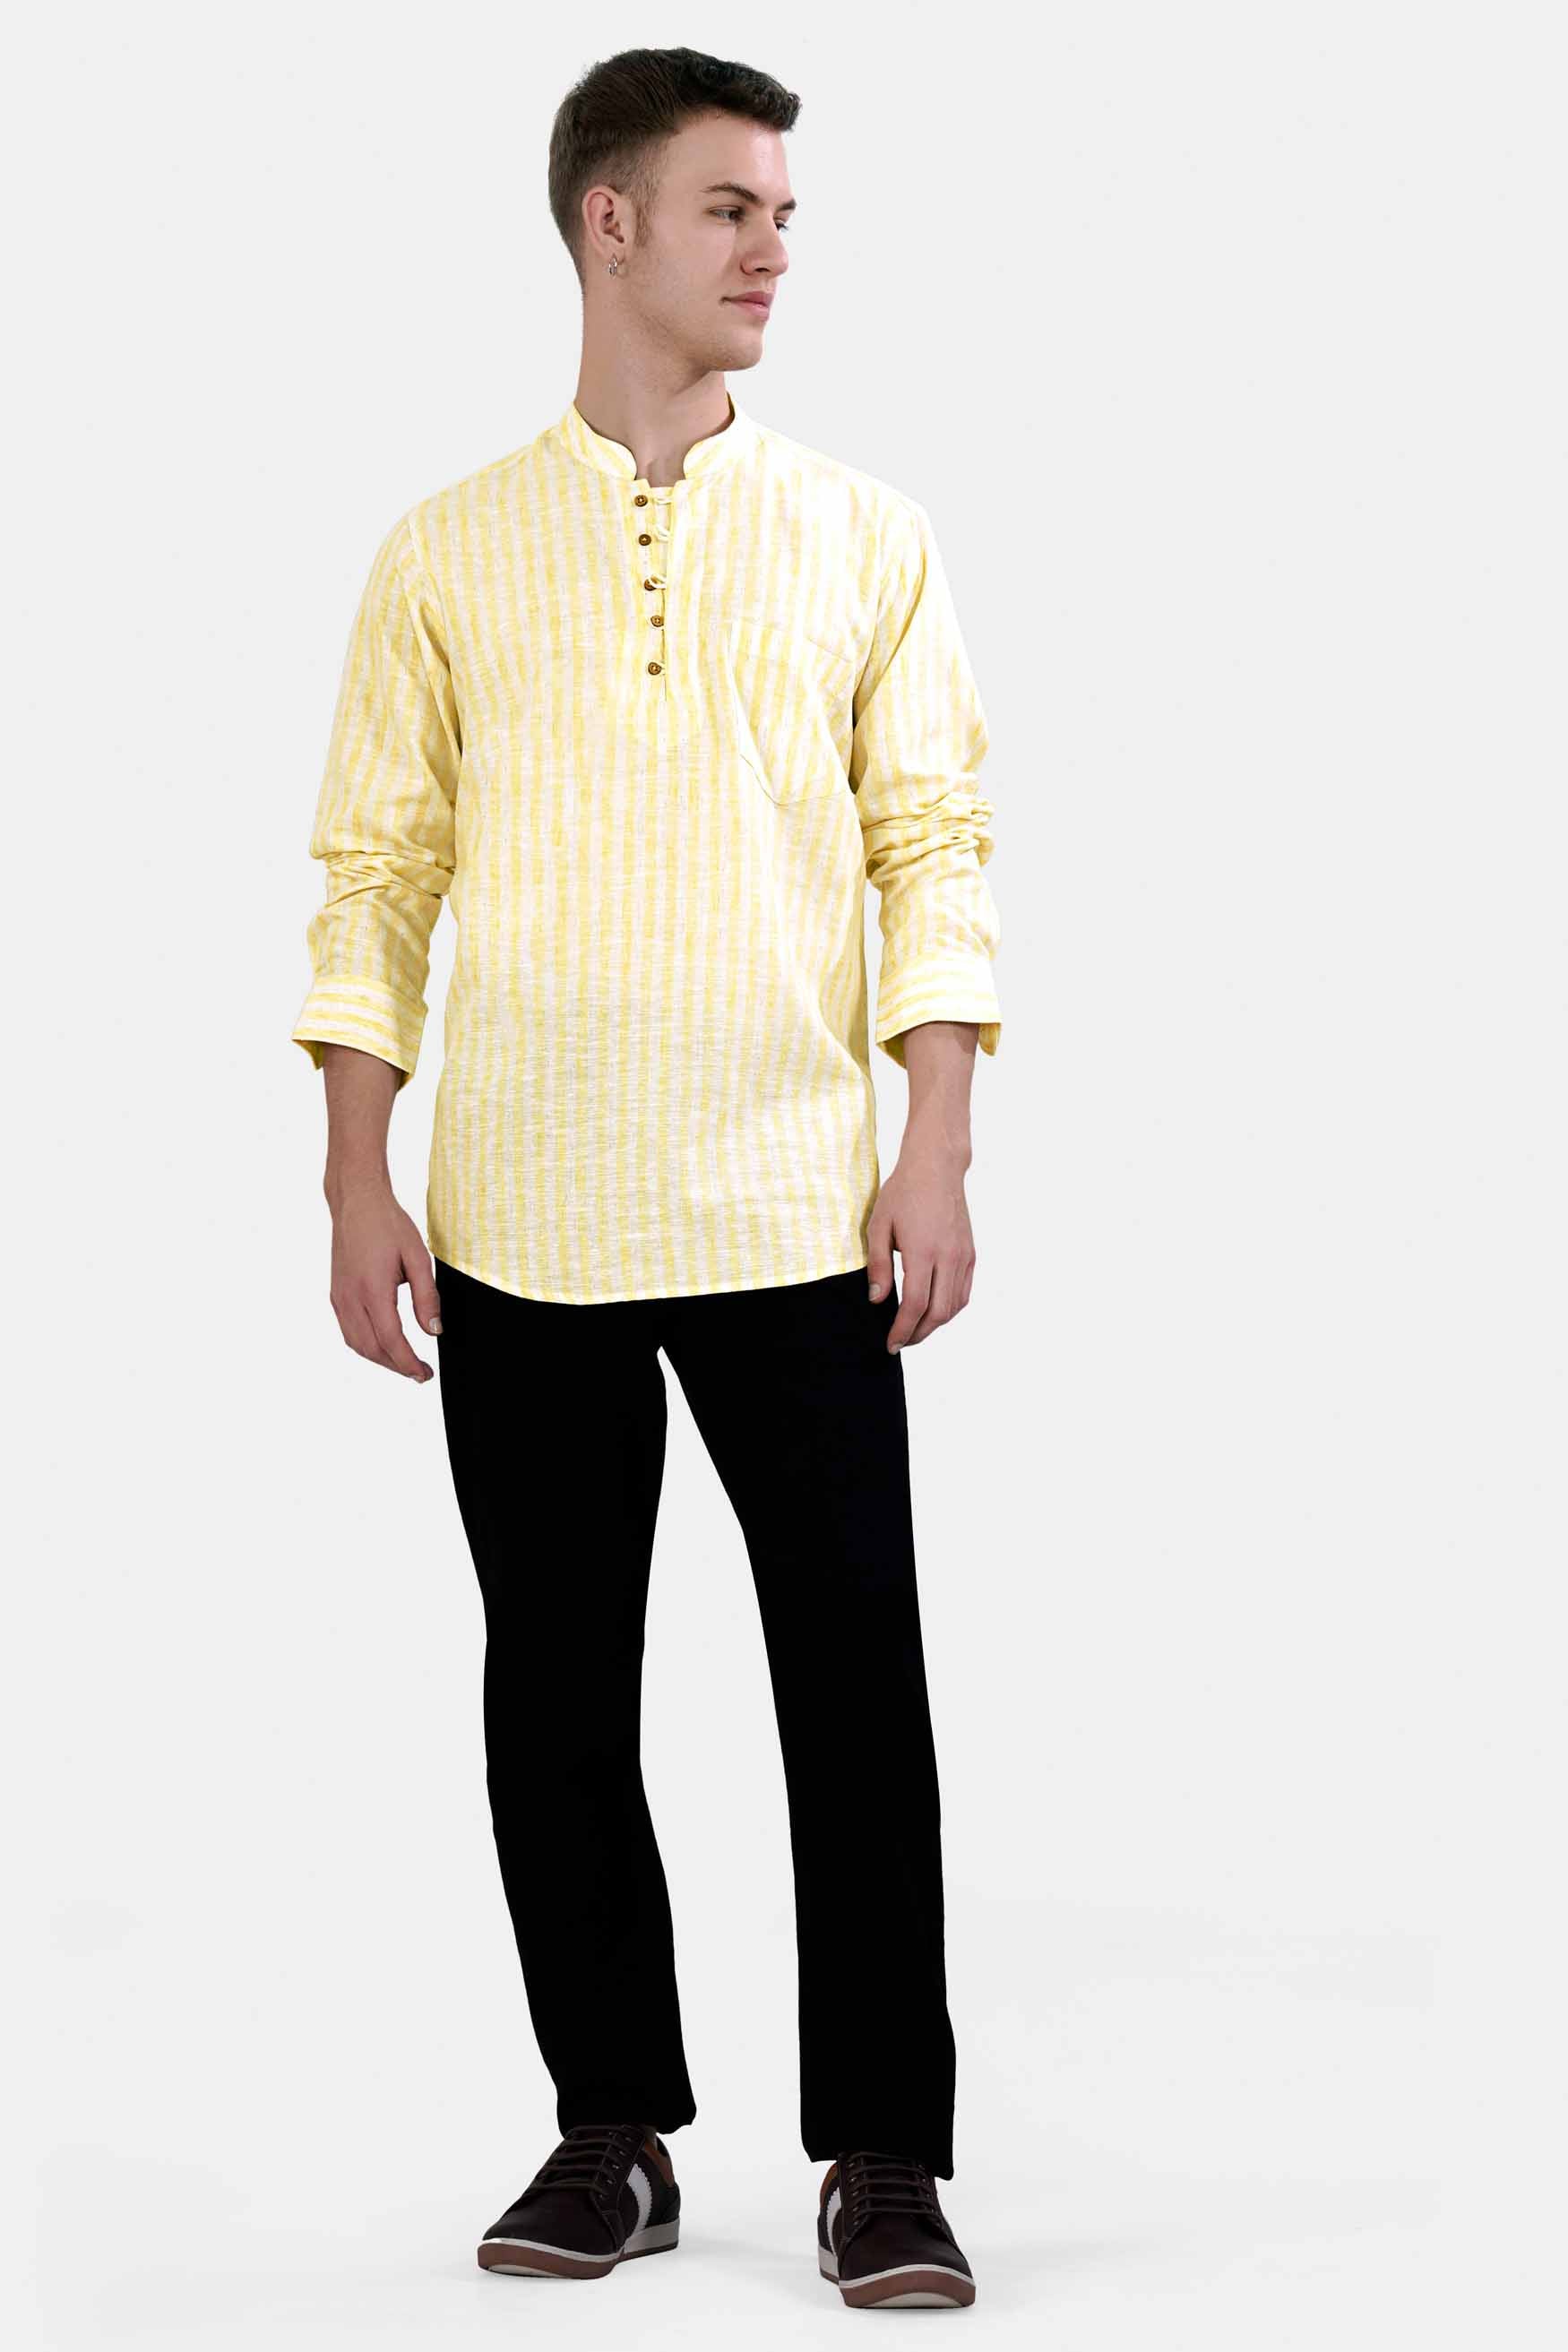 Brulee Yellow and White Striped Luxurious Linen Kurta Shirt